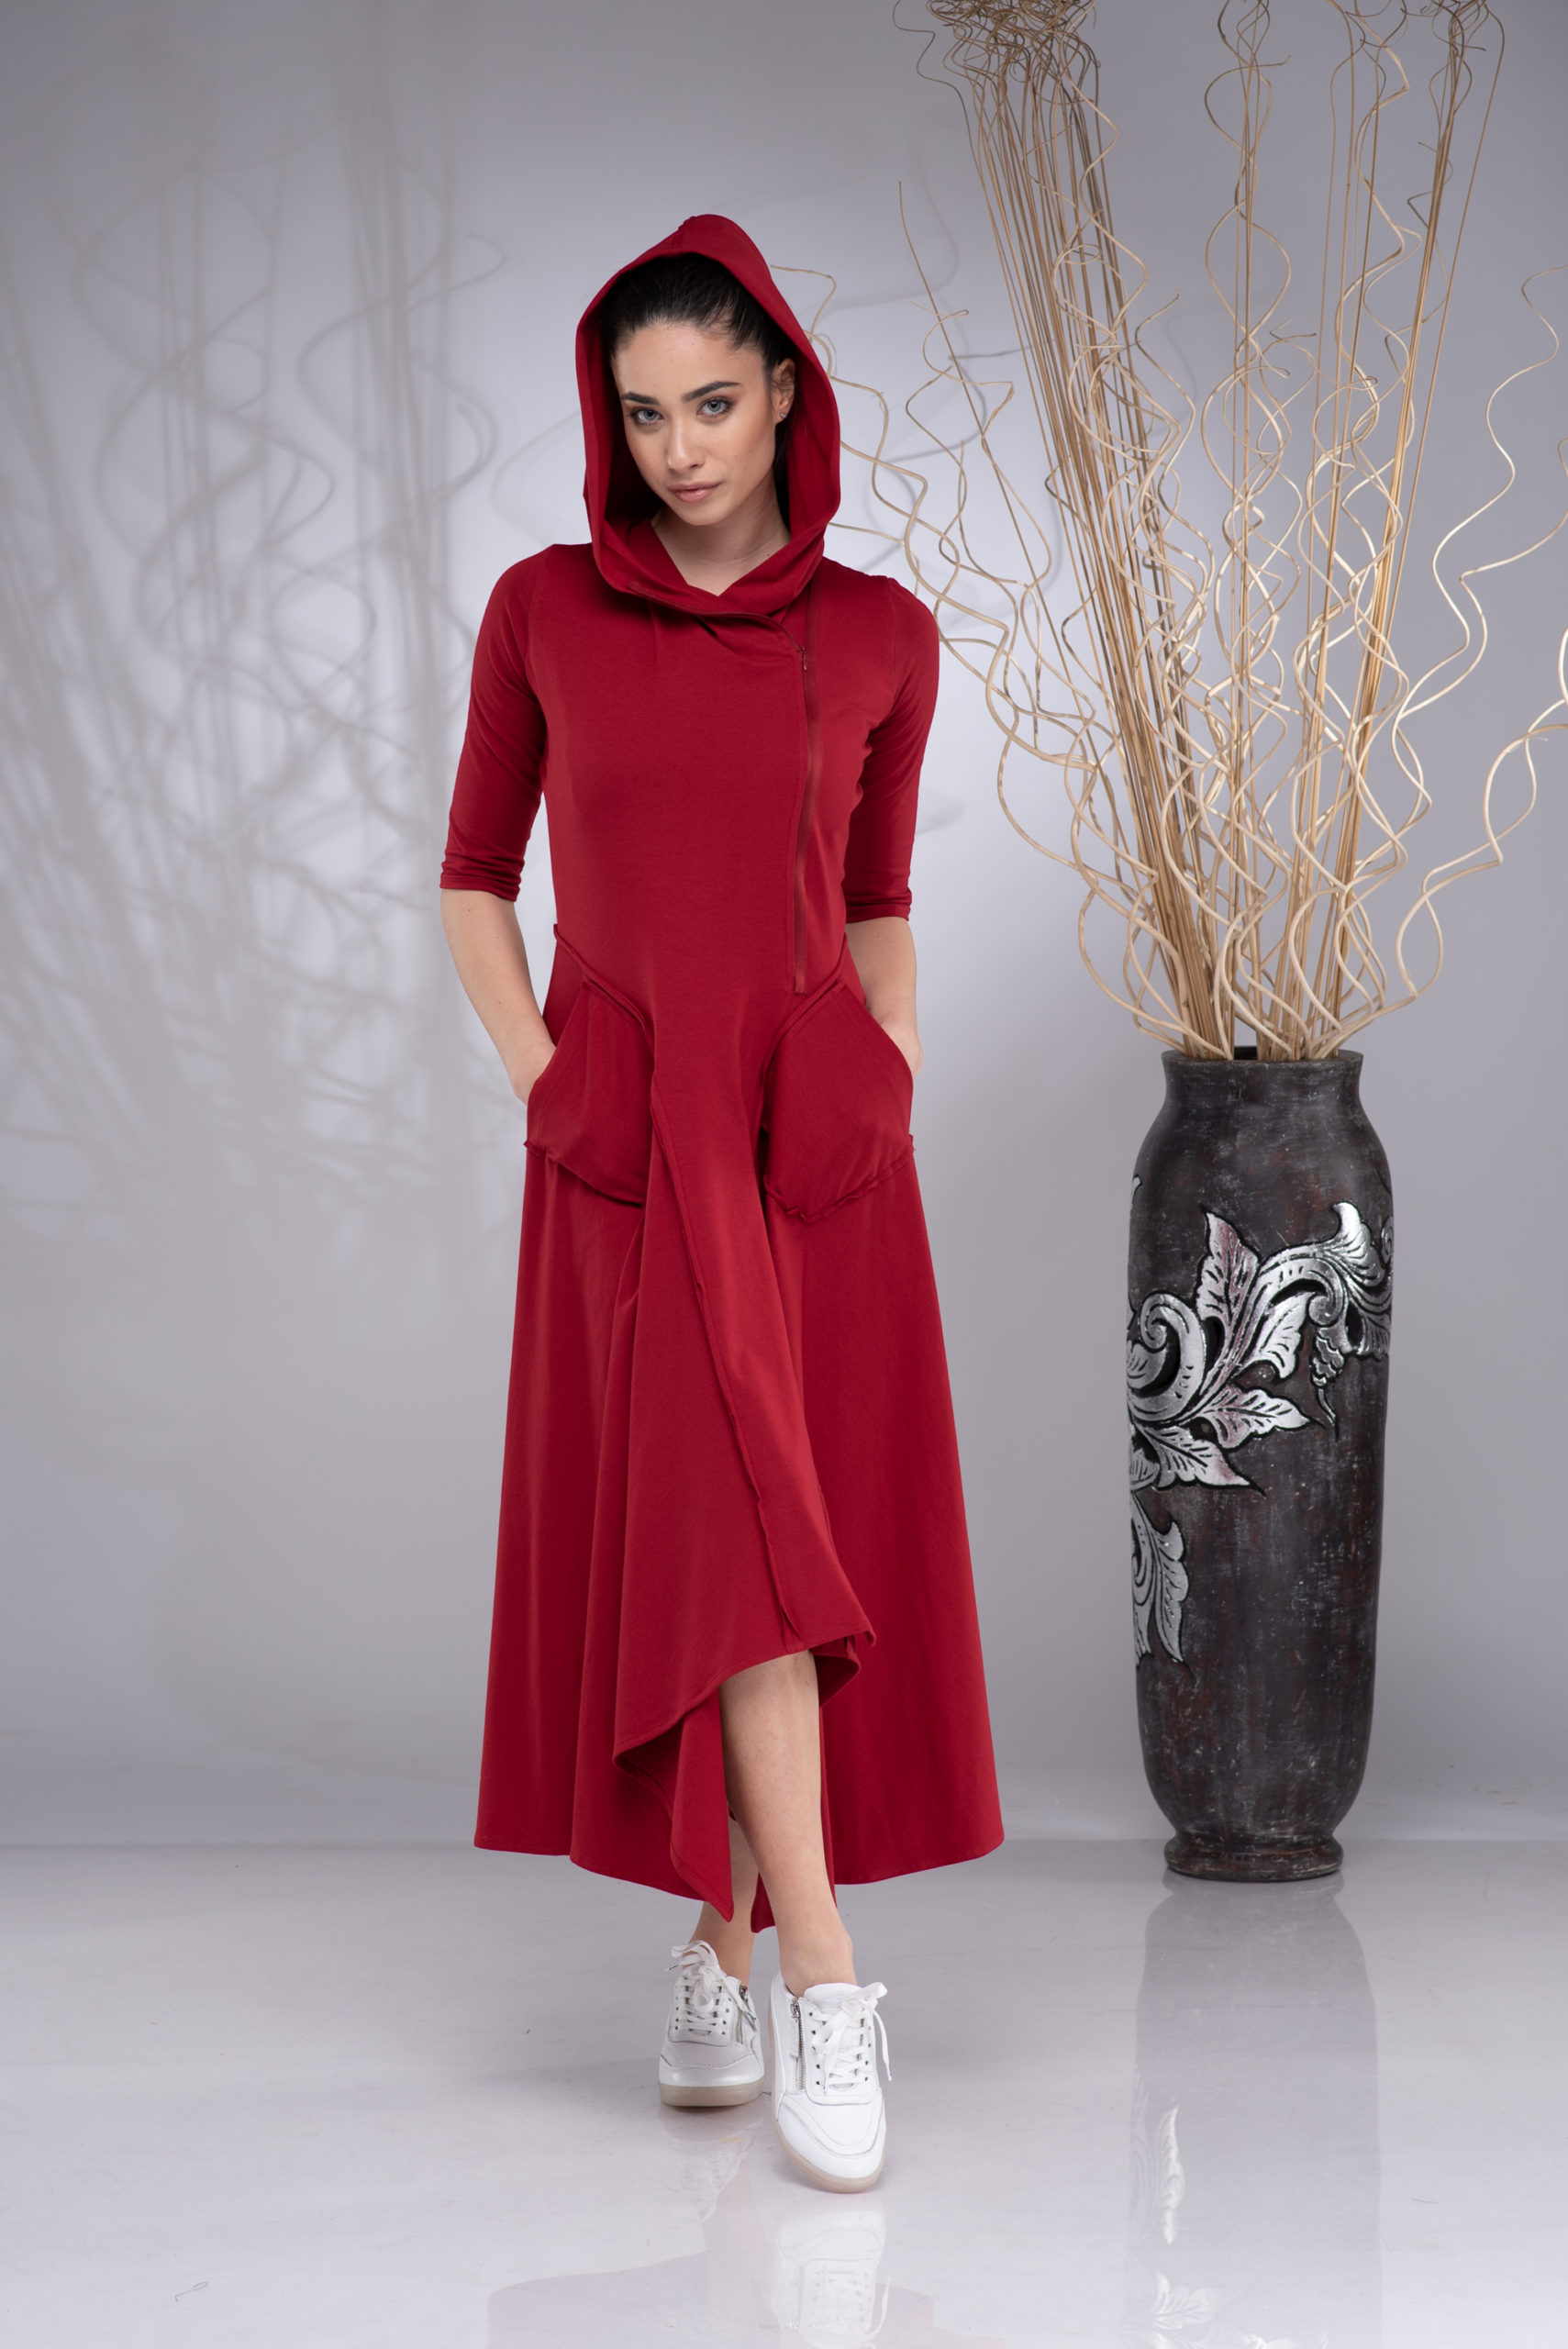 https://www.allseams.com/wp-content/uploads/2021/04/Pixie-Hooded-Dress-2-scaled.jpg